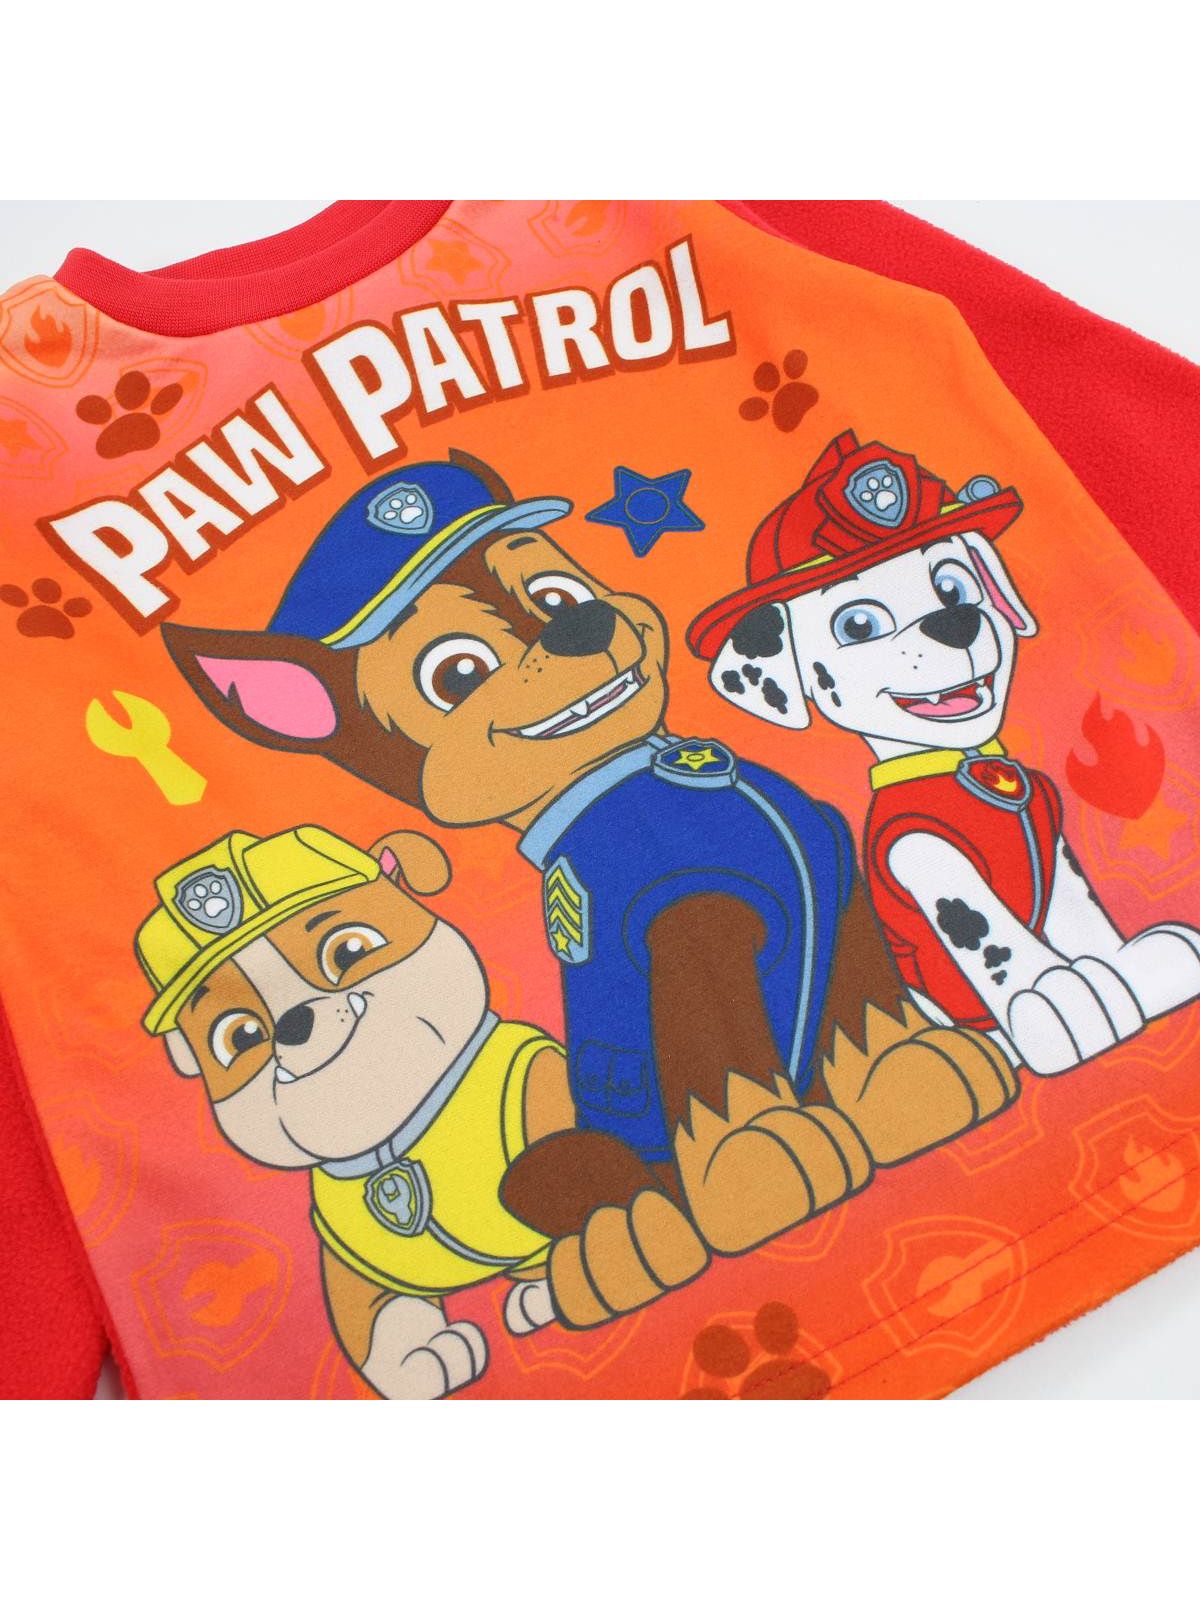 Paw Patrol pijama de lana